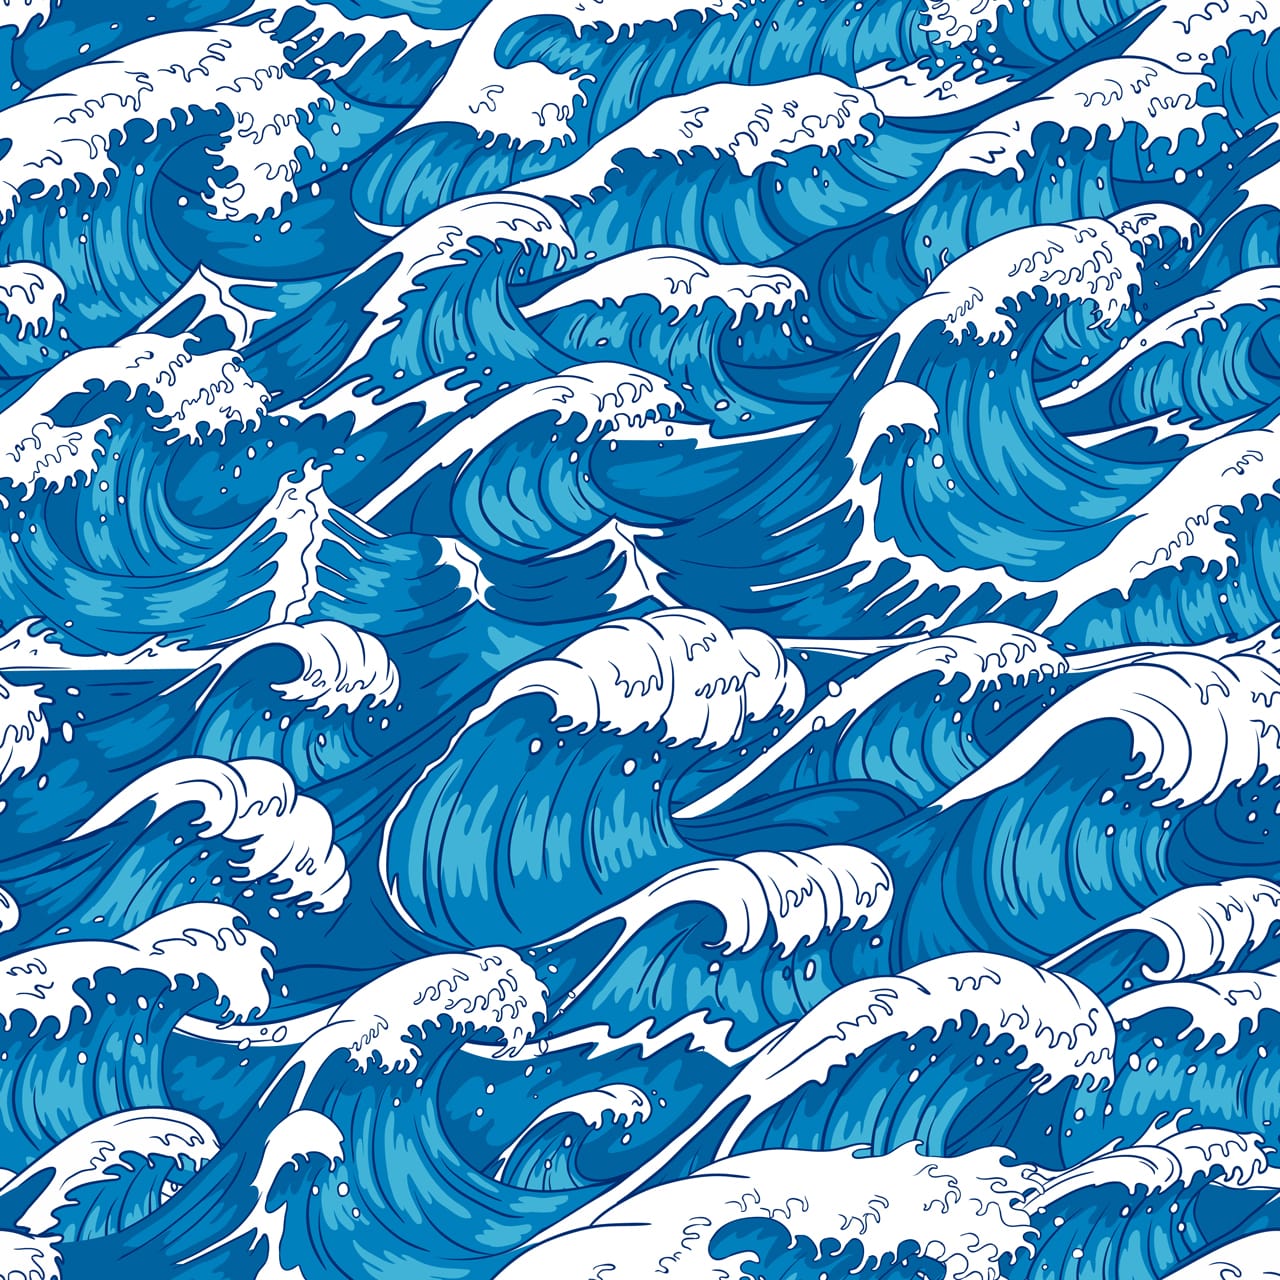 waves clip art